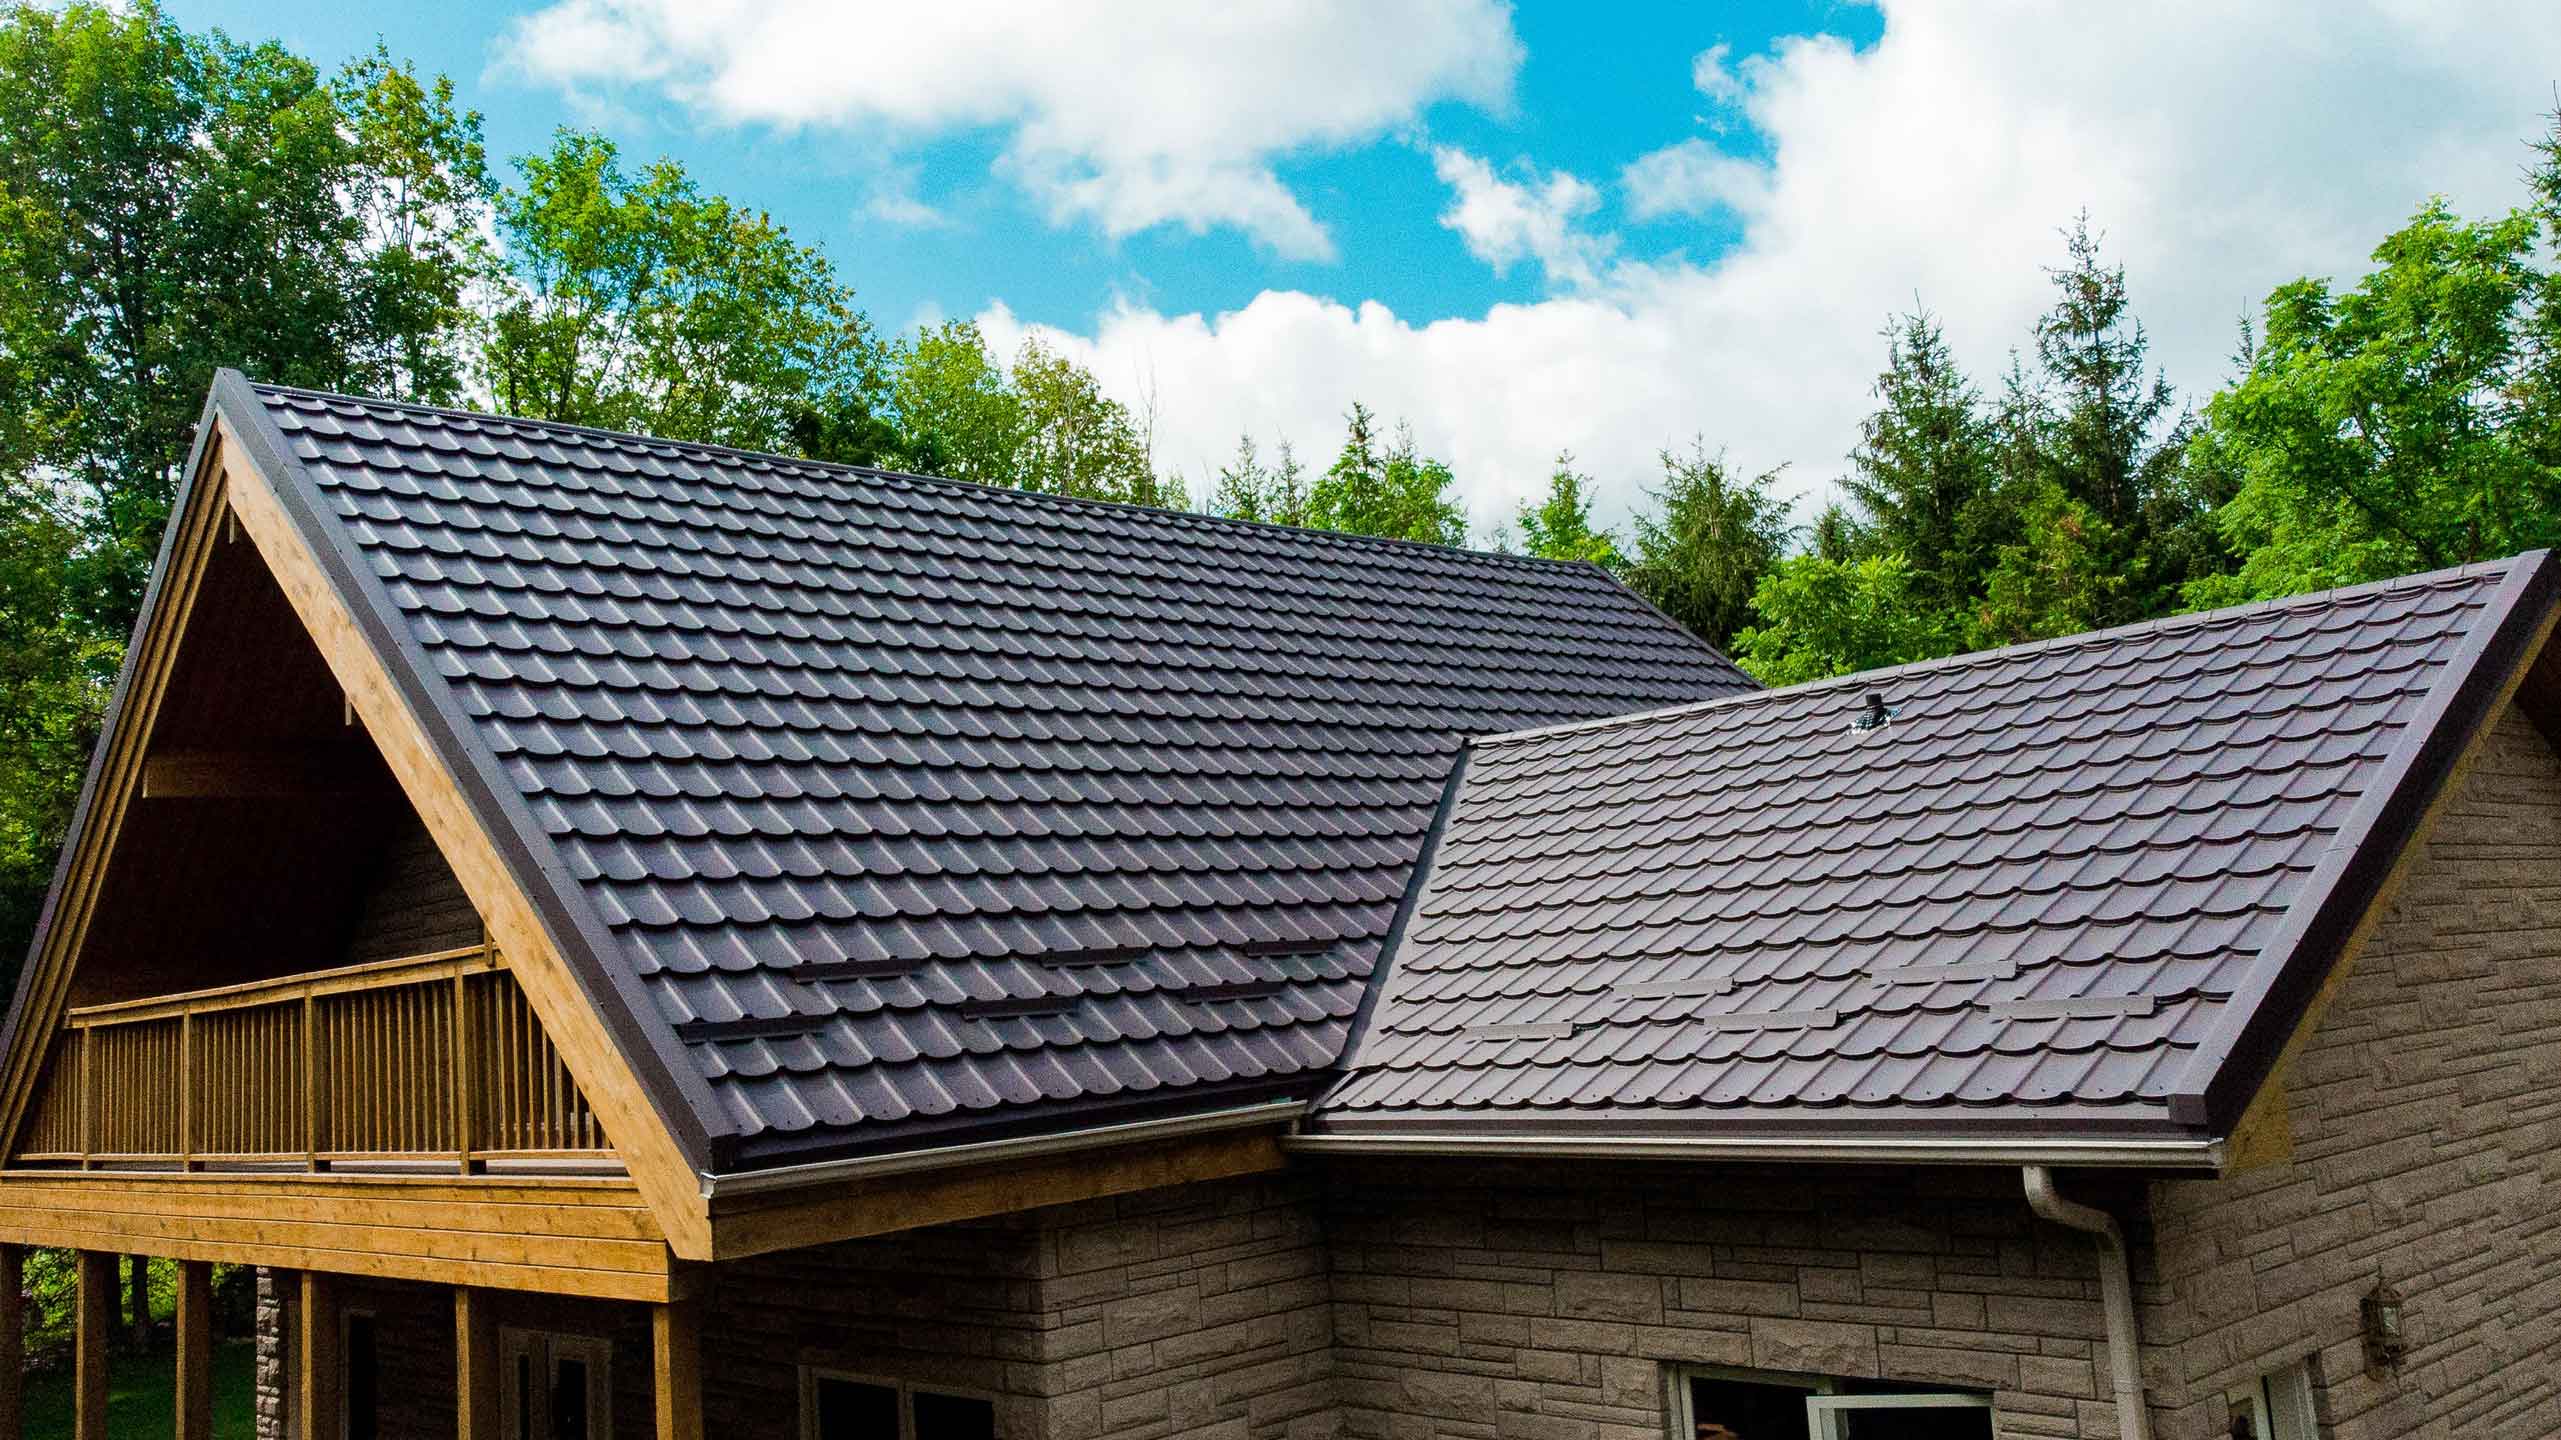 Whistler metal roof profile